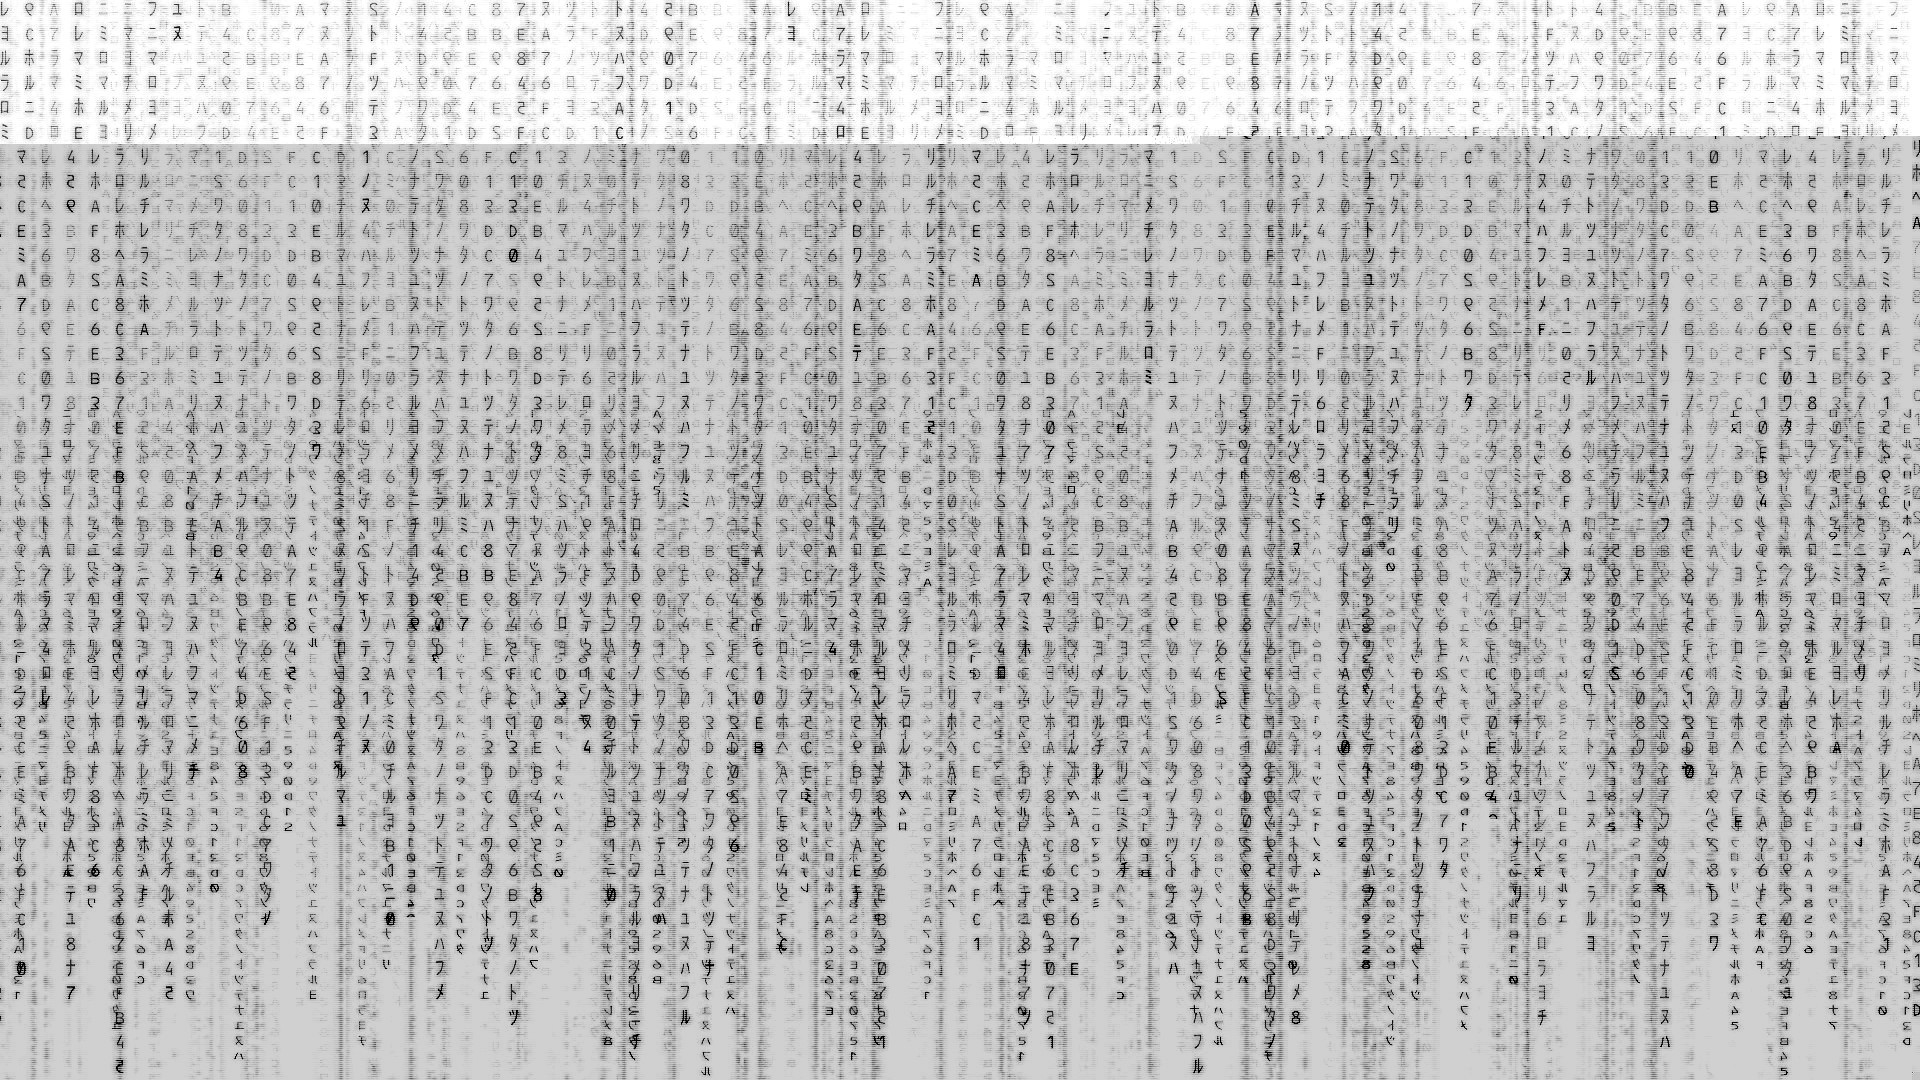 General 1920x1080 minimalism The Matrix movies gray white digital art